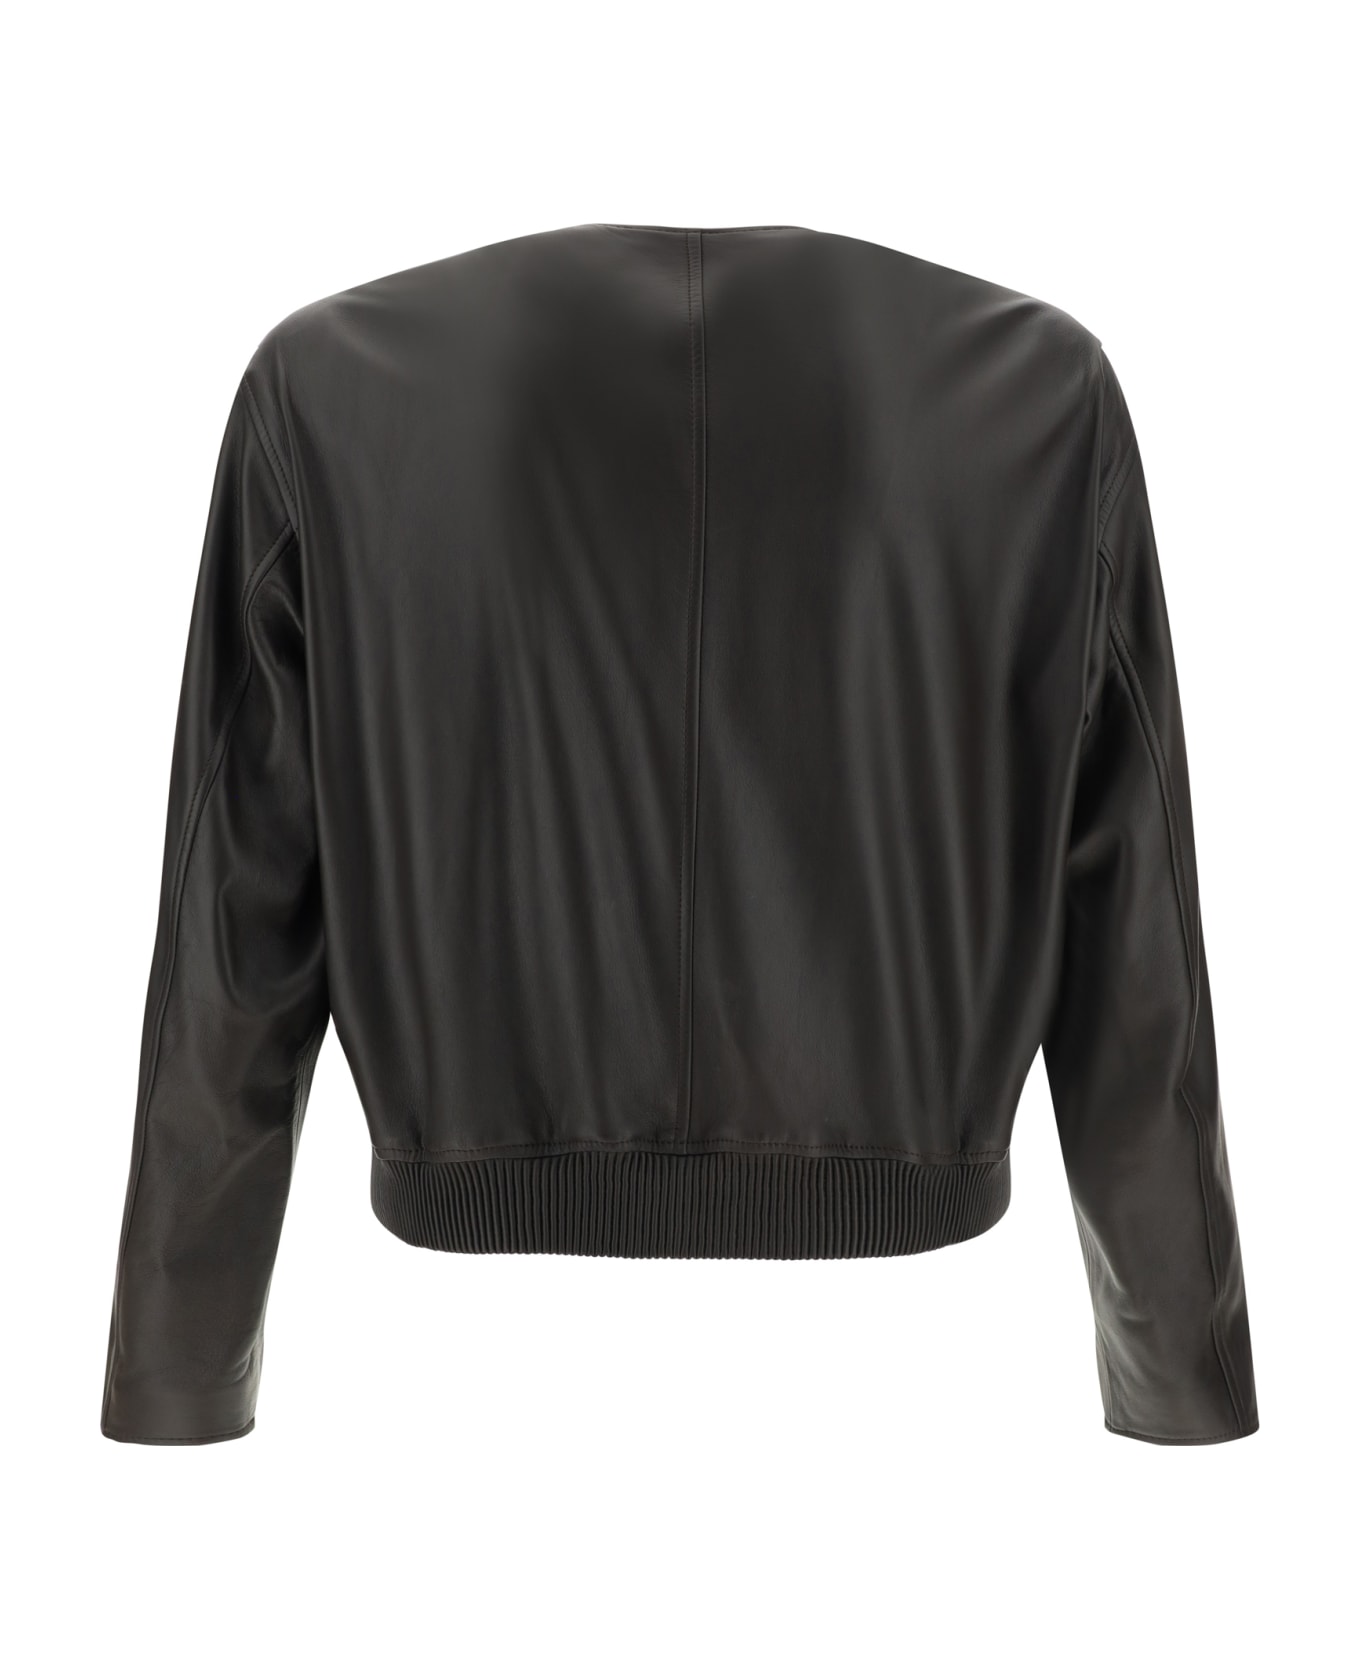 Dolce metallic & Gabbana Leather Jacket - Marrone Scuro